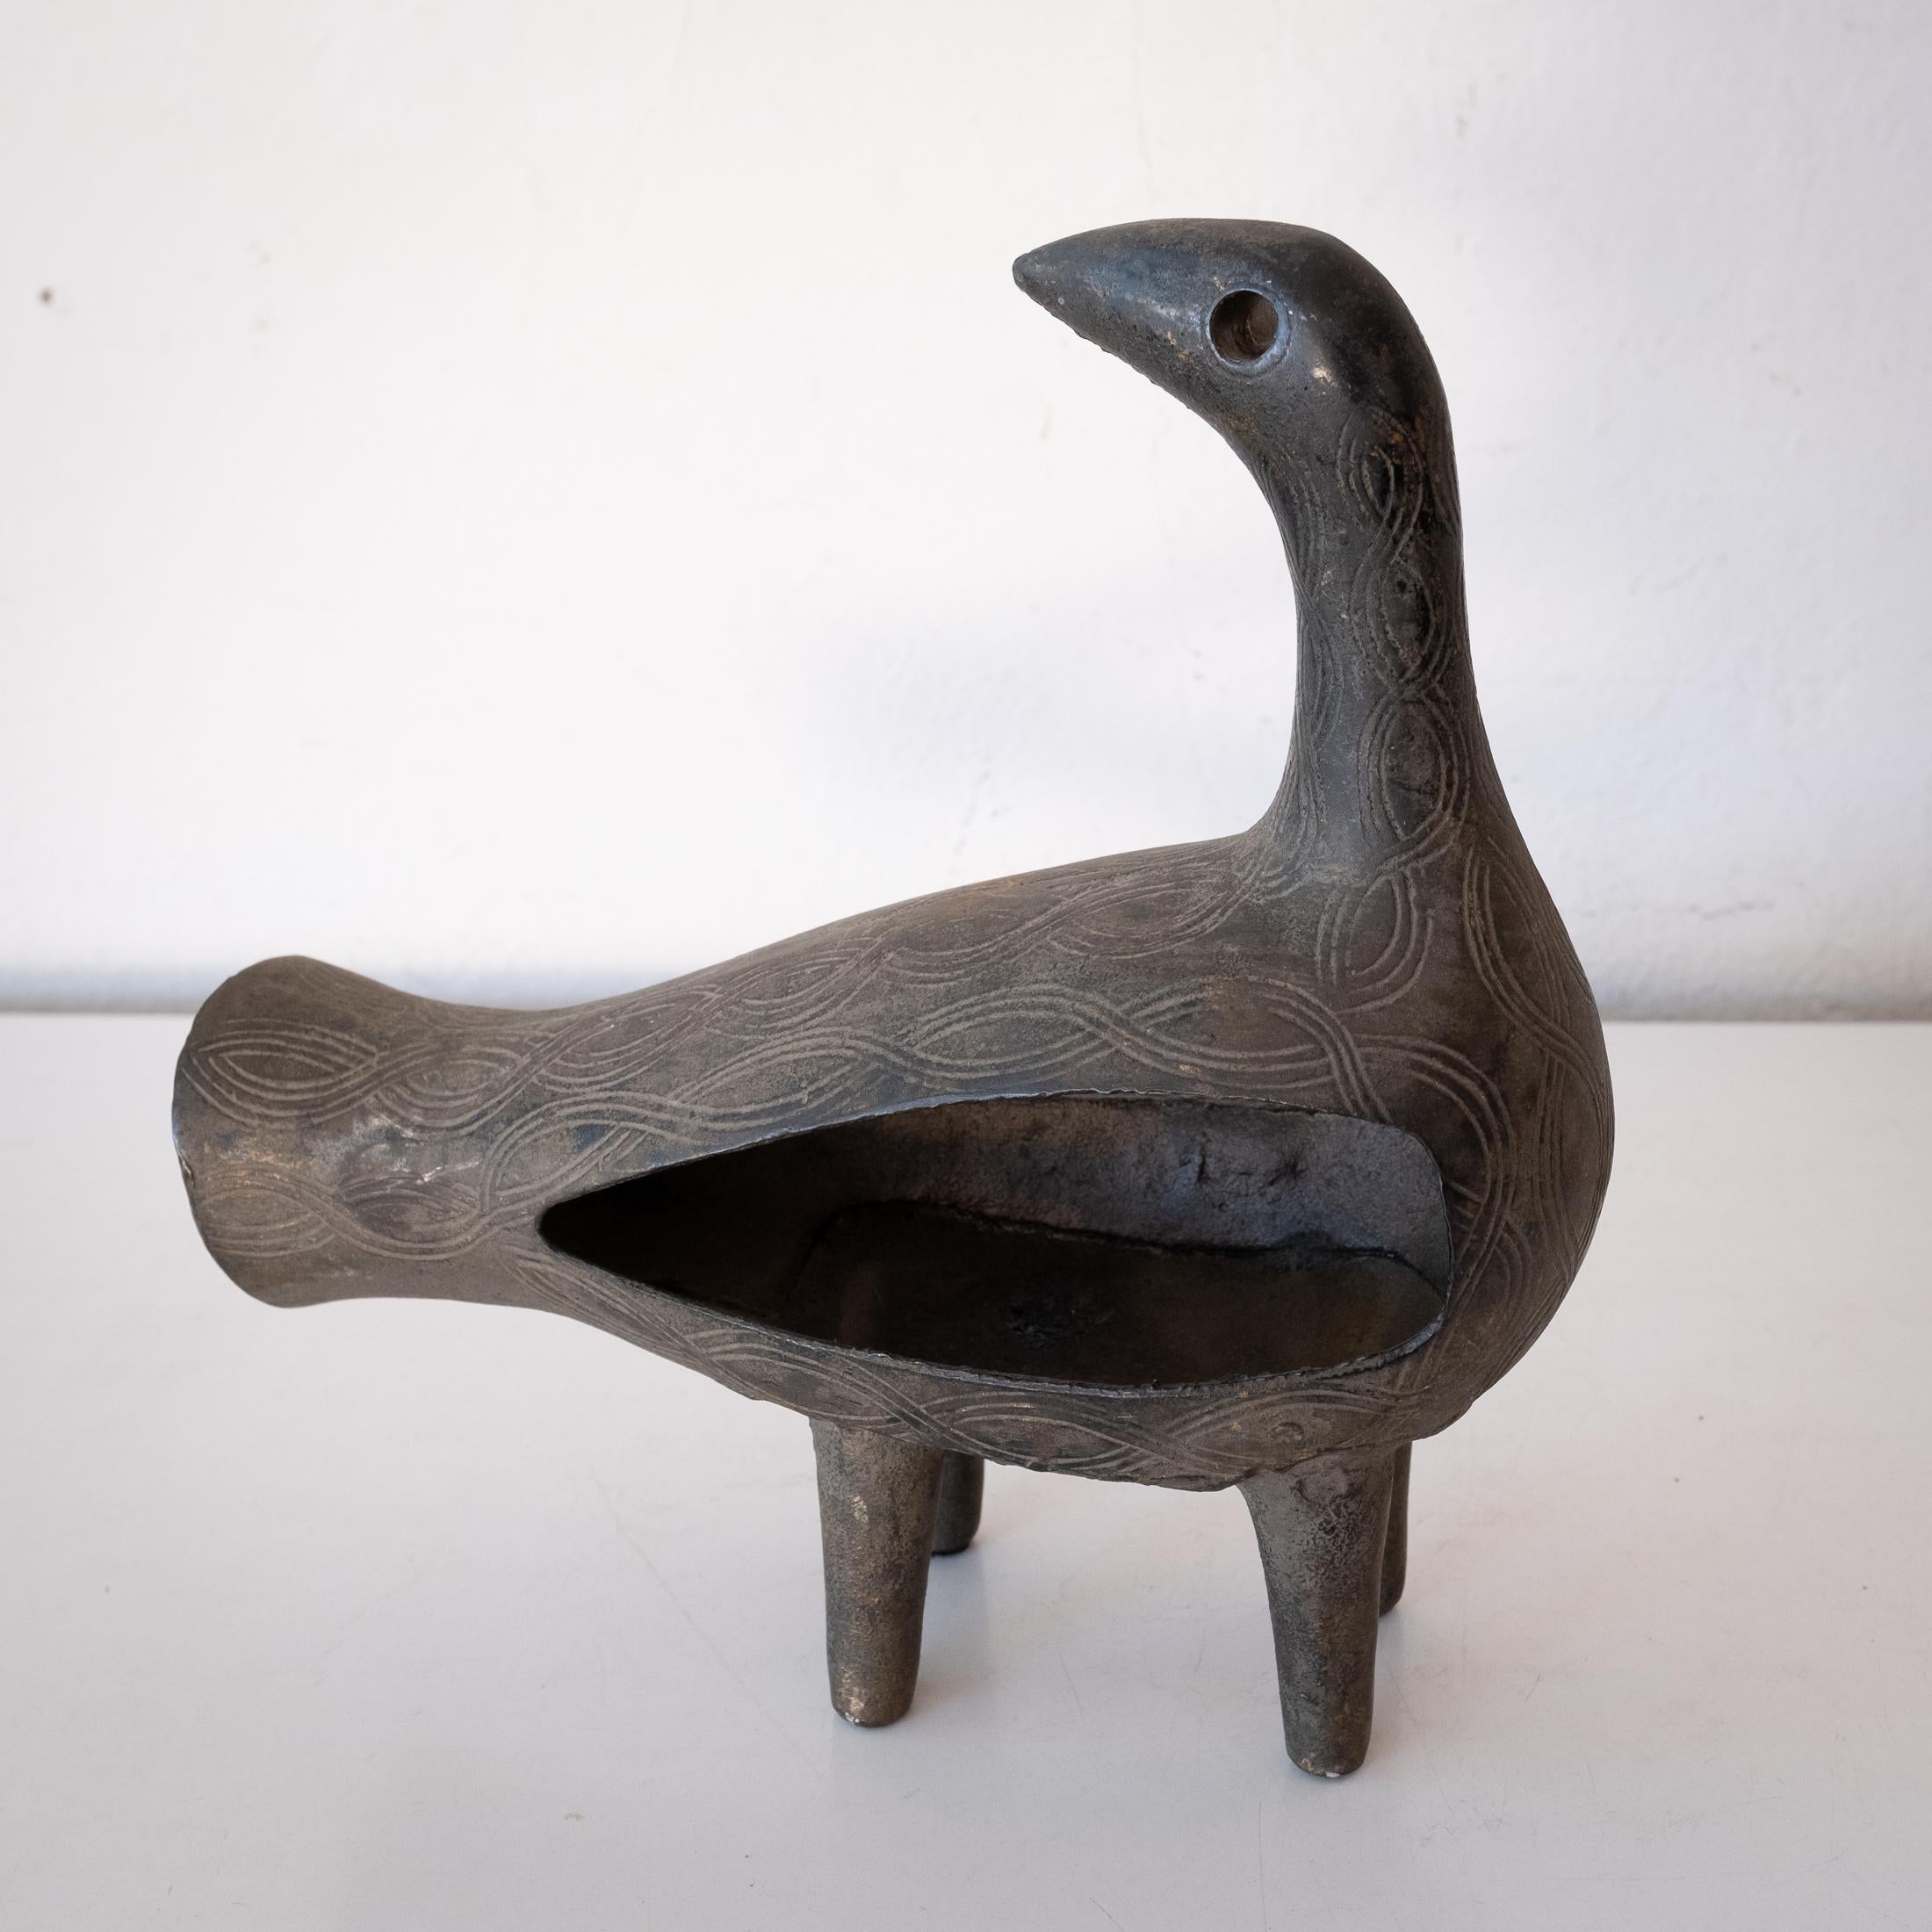 20th Century Modernist Japanese Cast Iron Bird Sculpture 1950s